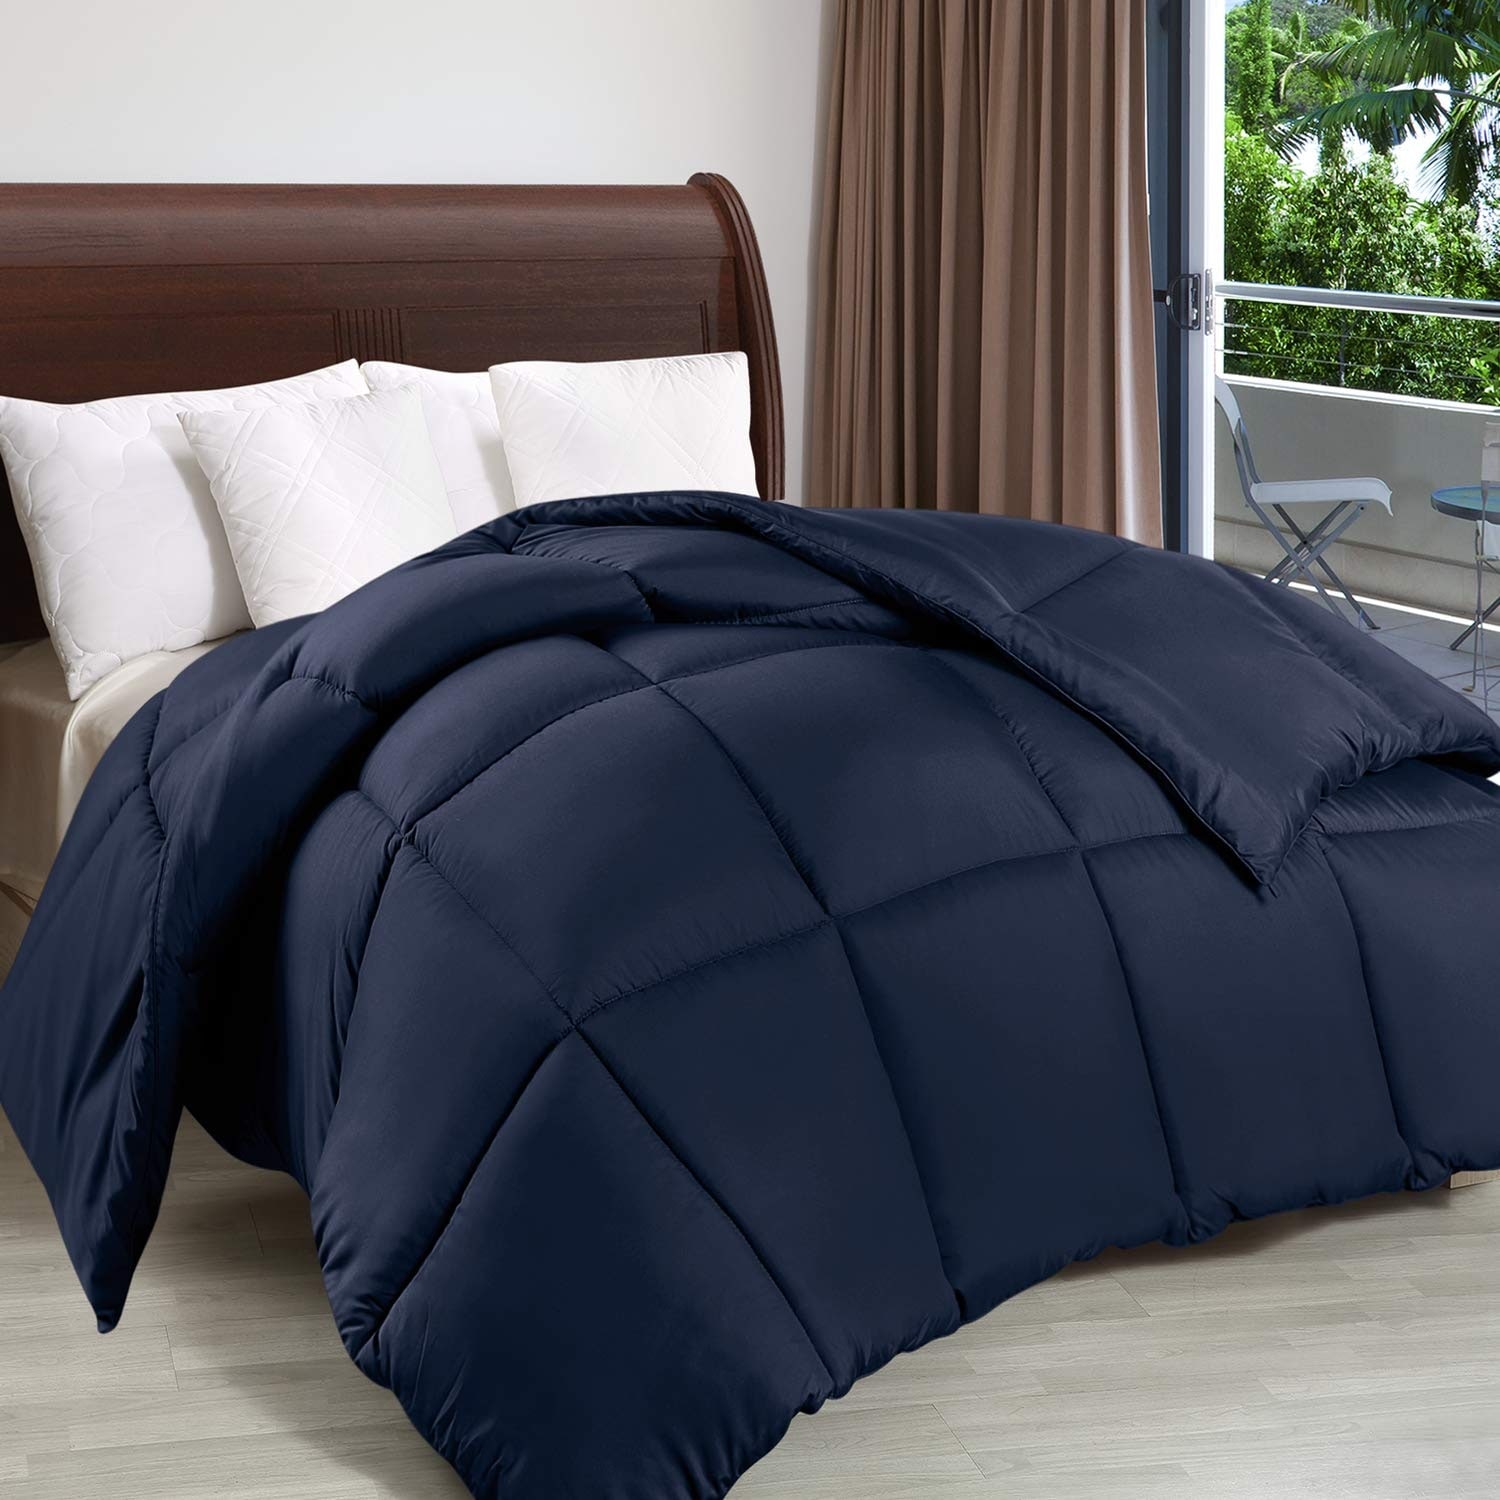  Utopia Bedding Comforter Duvet Insert - Quilted Comforter with  Corner Tabs - Box Stitched Down Alternative Comforter (Queen, White) : Home  & Kitchen